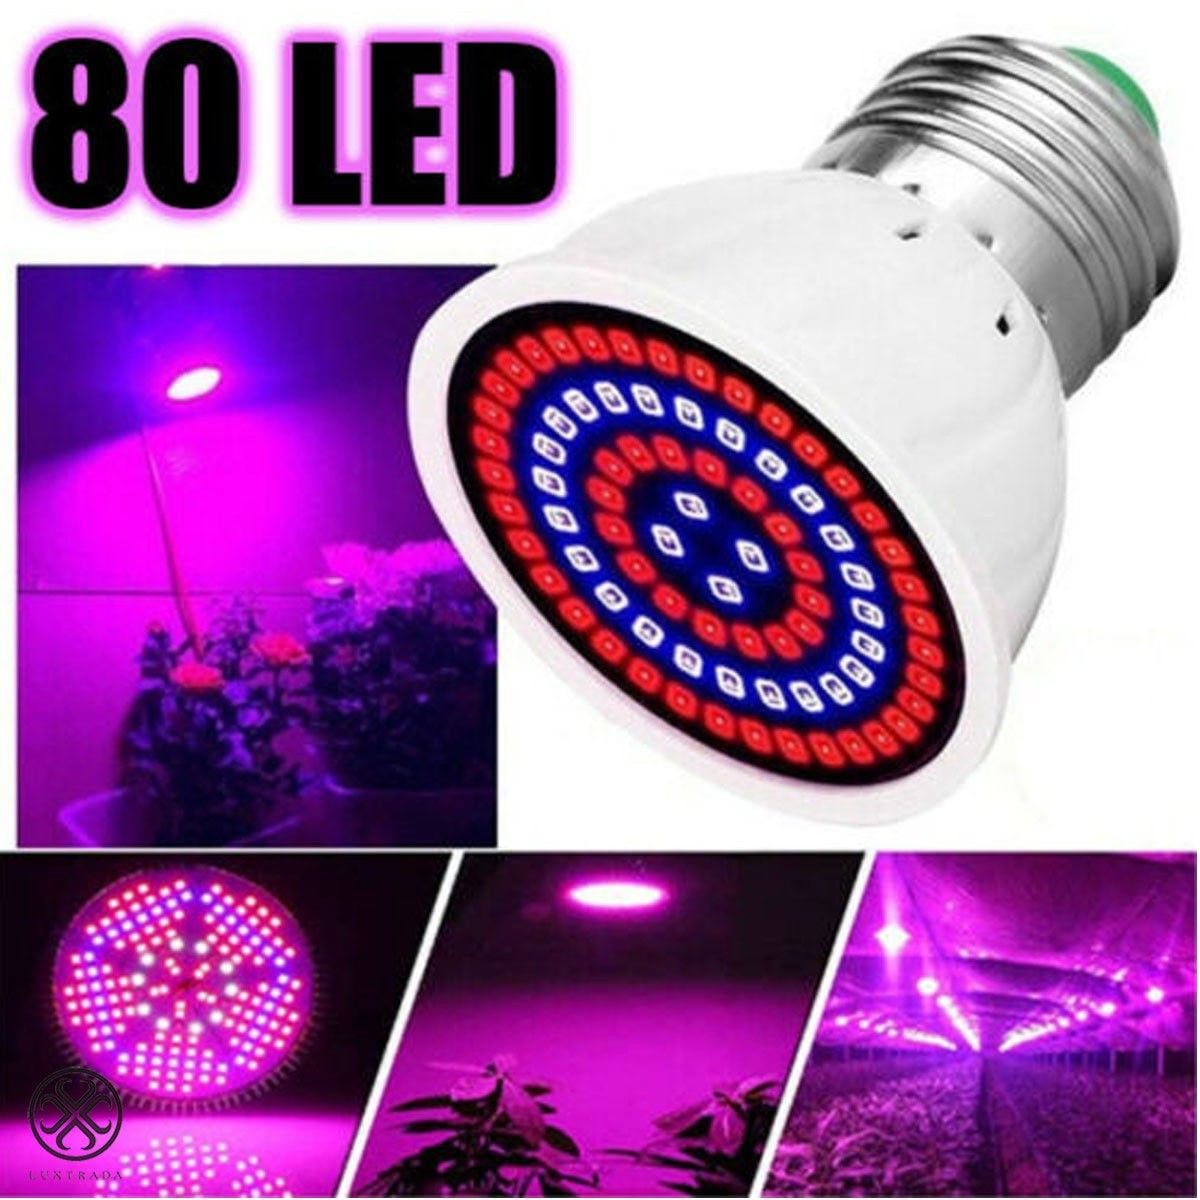 Details about   2 PCS 80 LED E27 Grow Light Bulb Indoor Plants Growing Lights Full Spectrum Lamp 